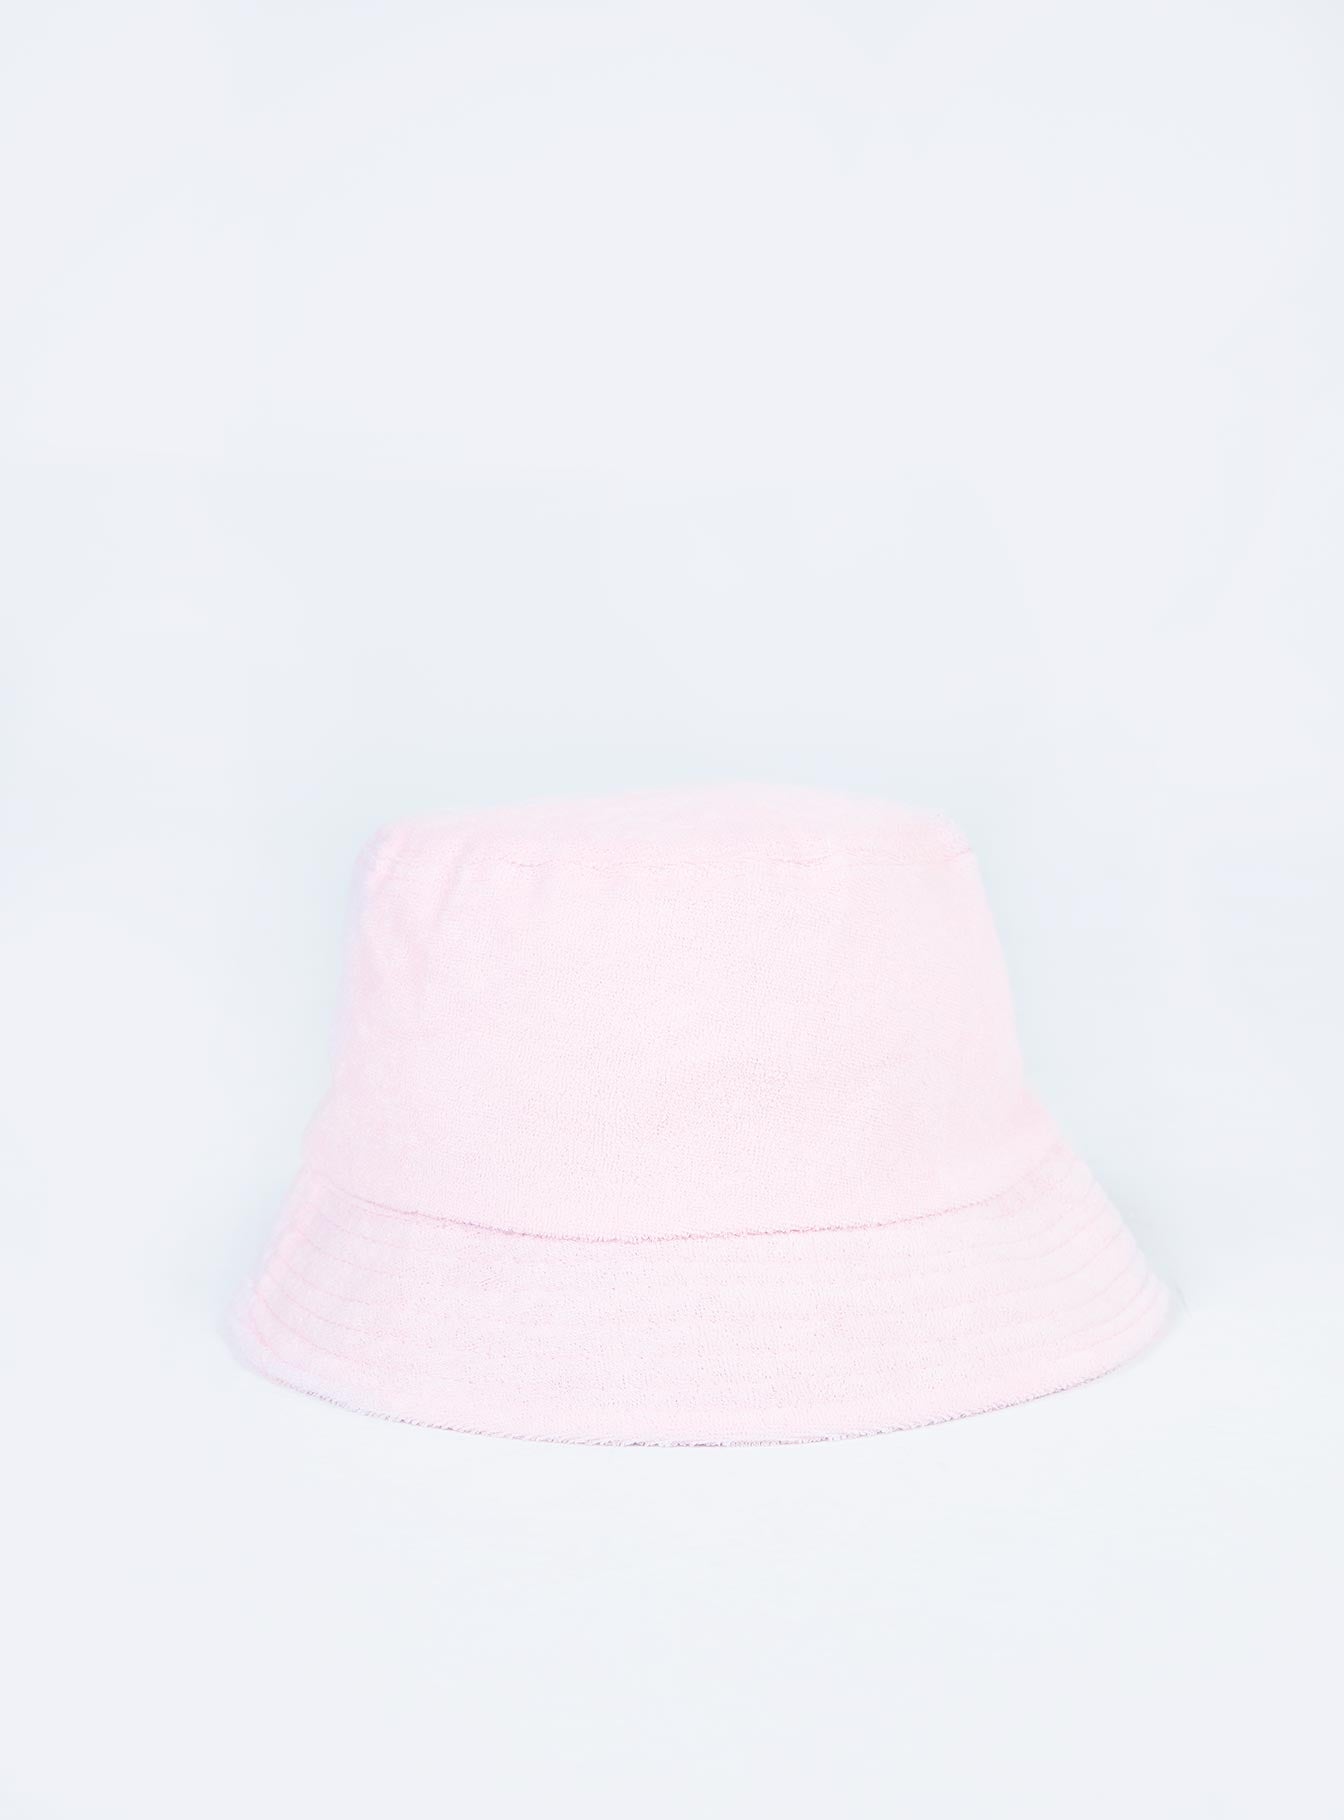 pink baby sun hat